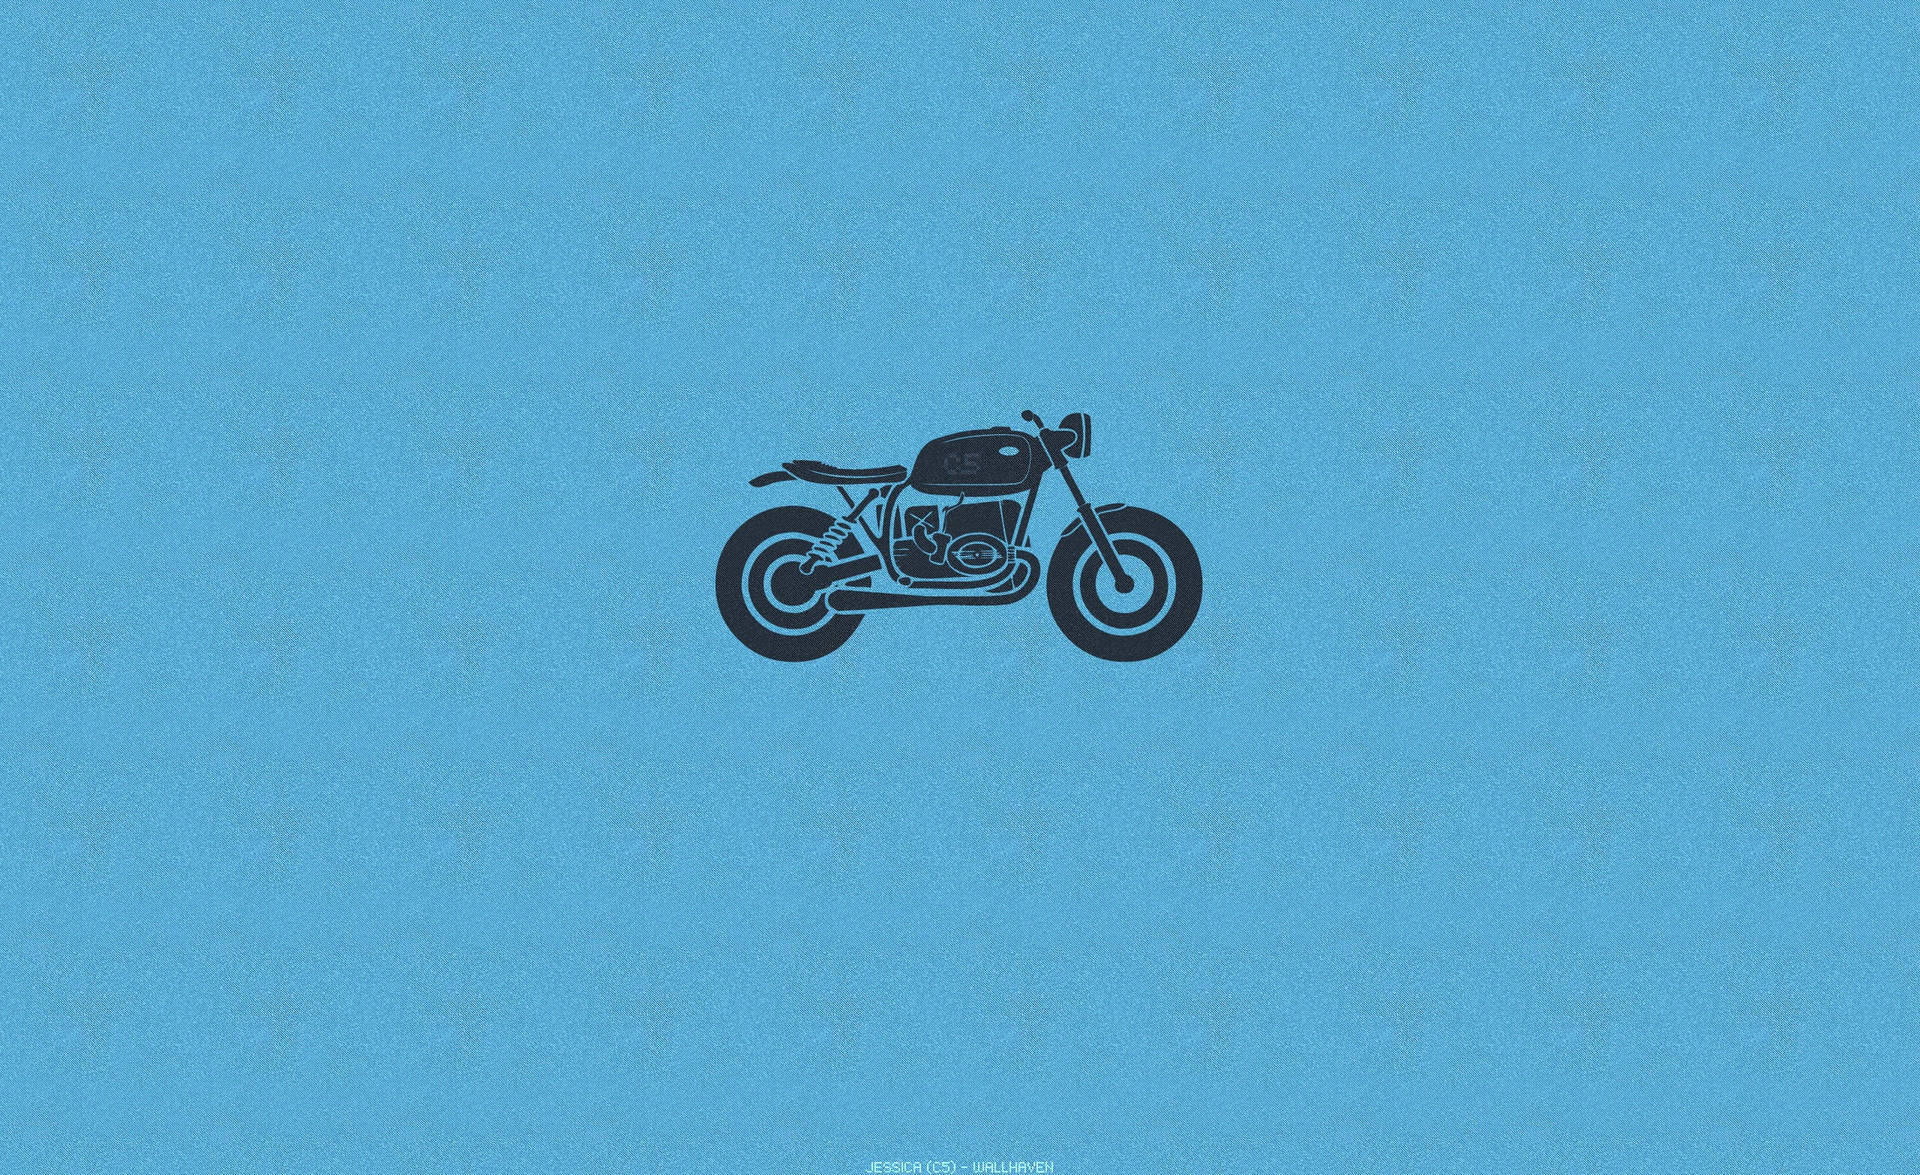 Bobber Motorcycle Minimalist Art Wallpaper